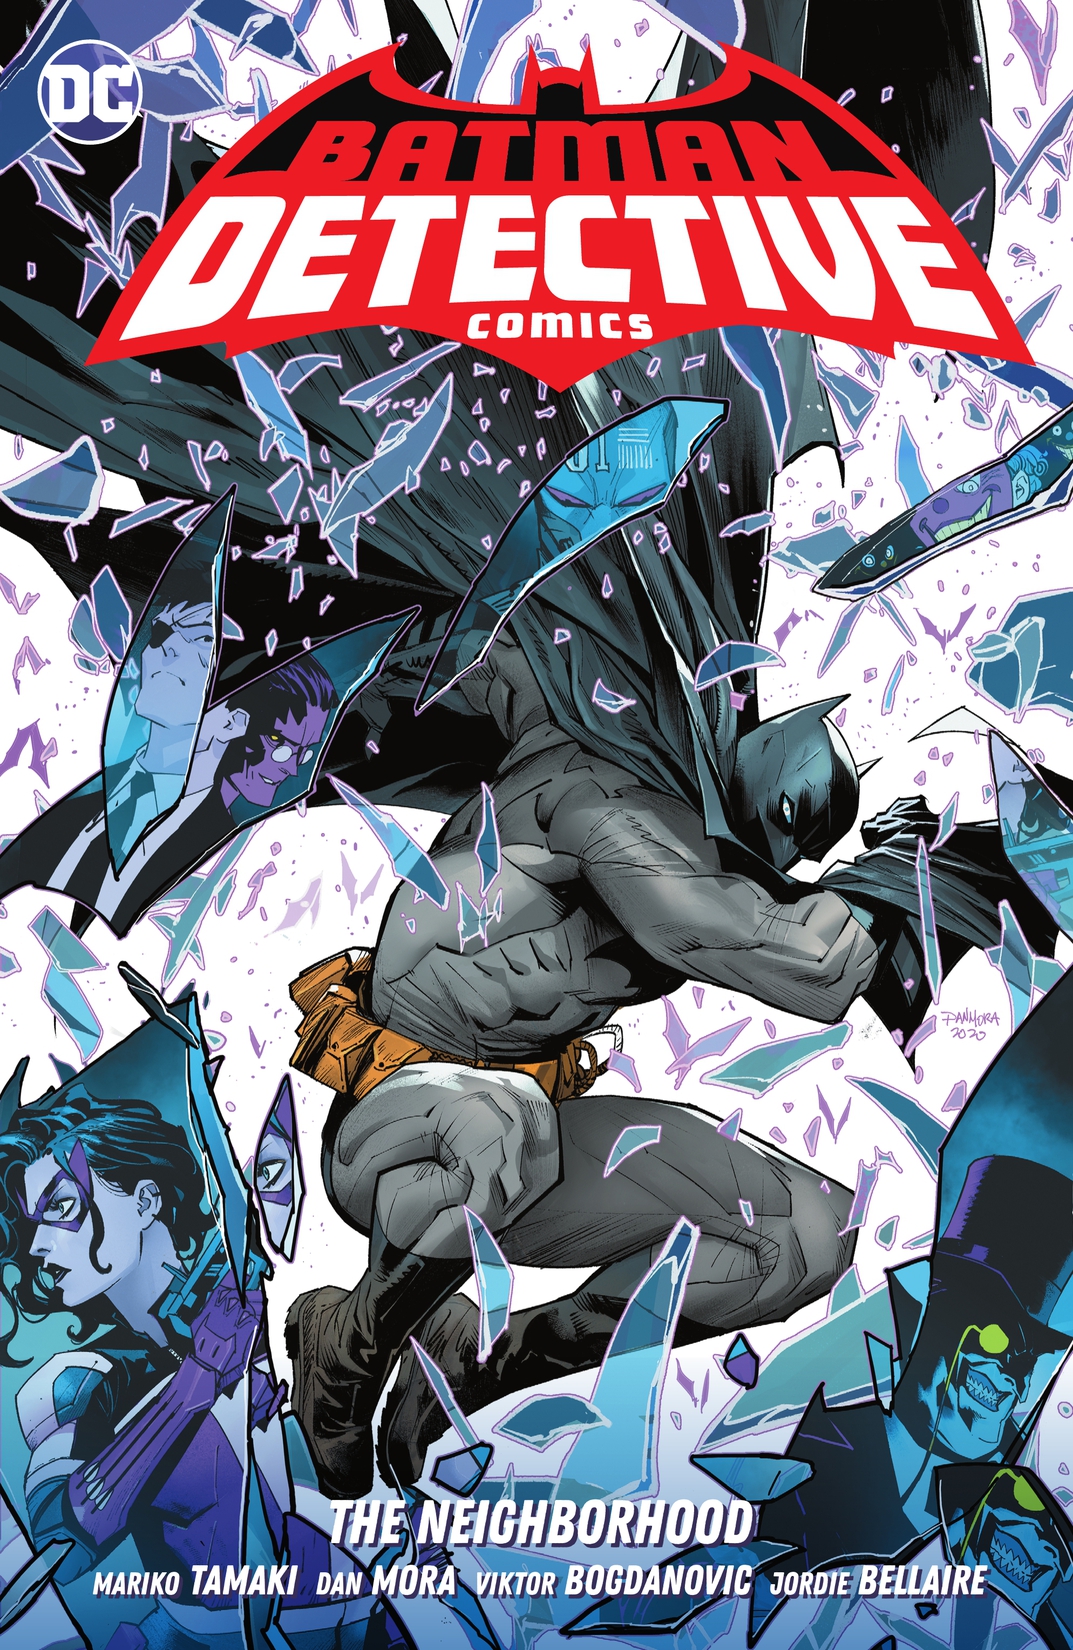 Batman: Detective Comics Vol. 1: The Neighborhood  preview images